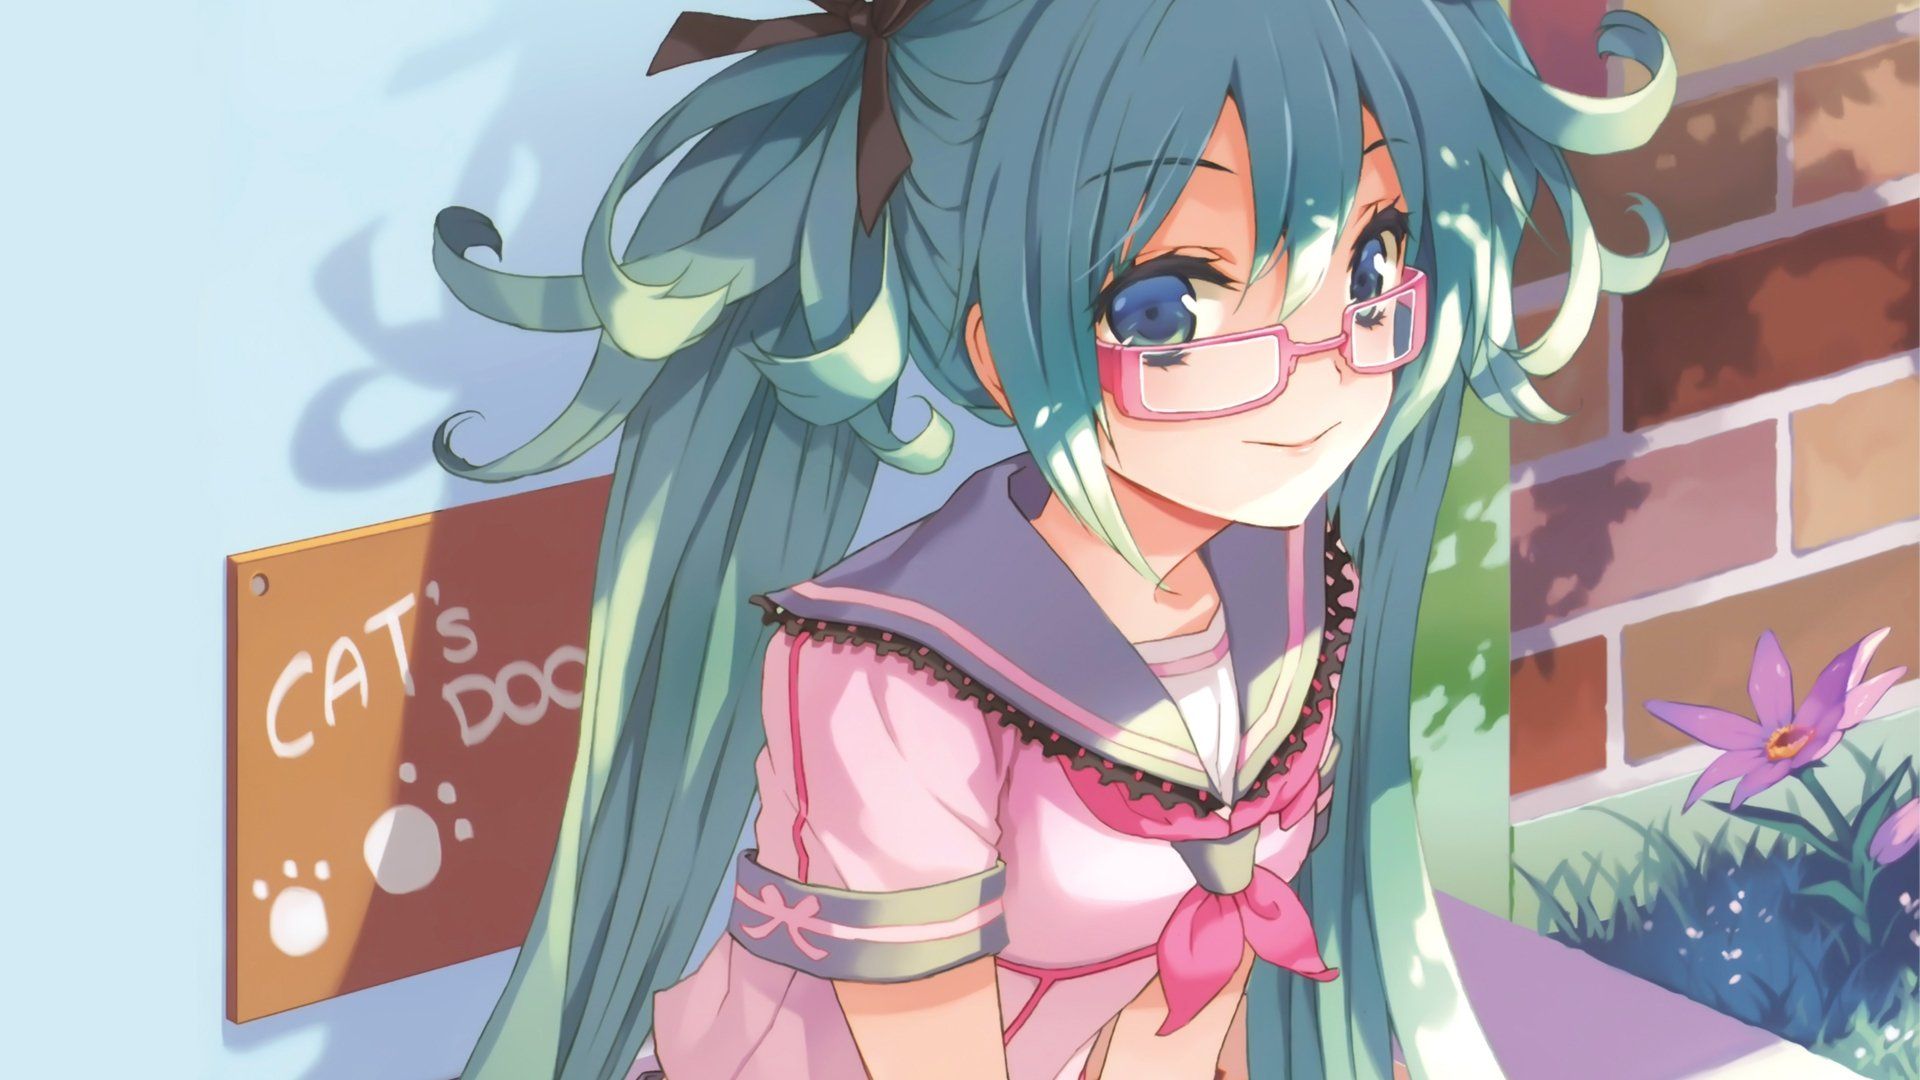 Top 20 Best Anime Kawaii Wallpapers For Desktop, PC, Laptop